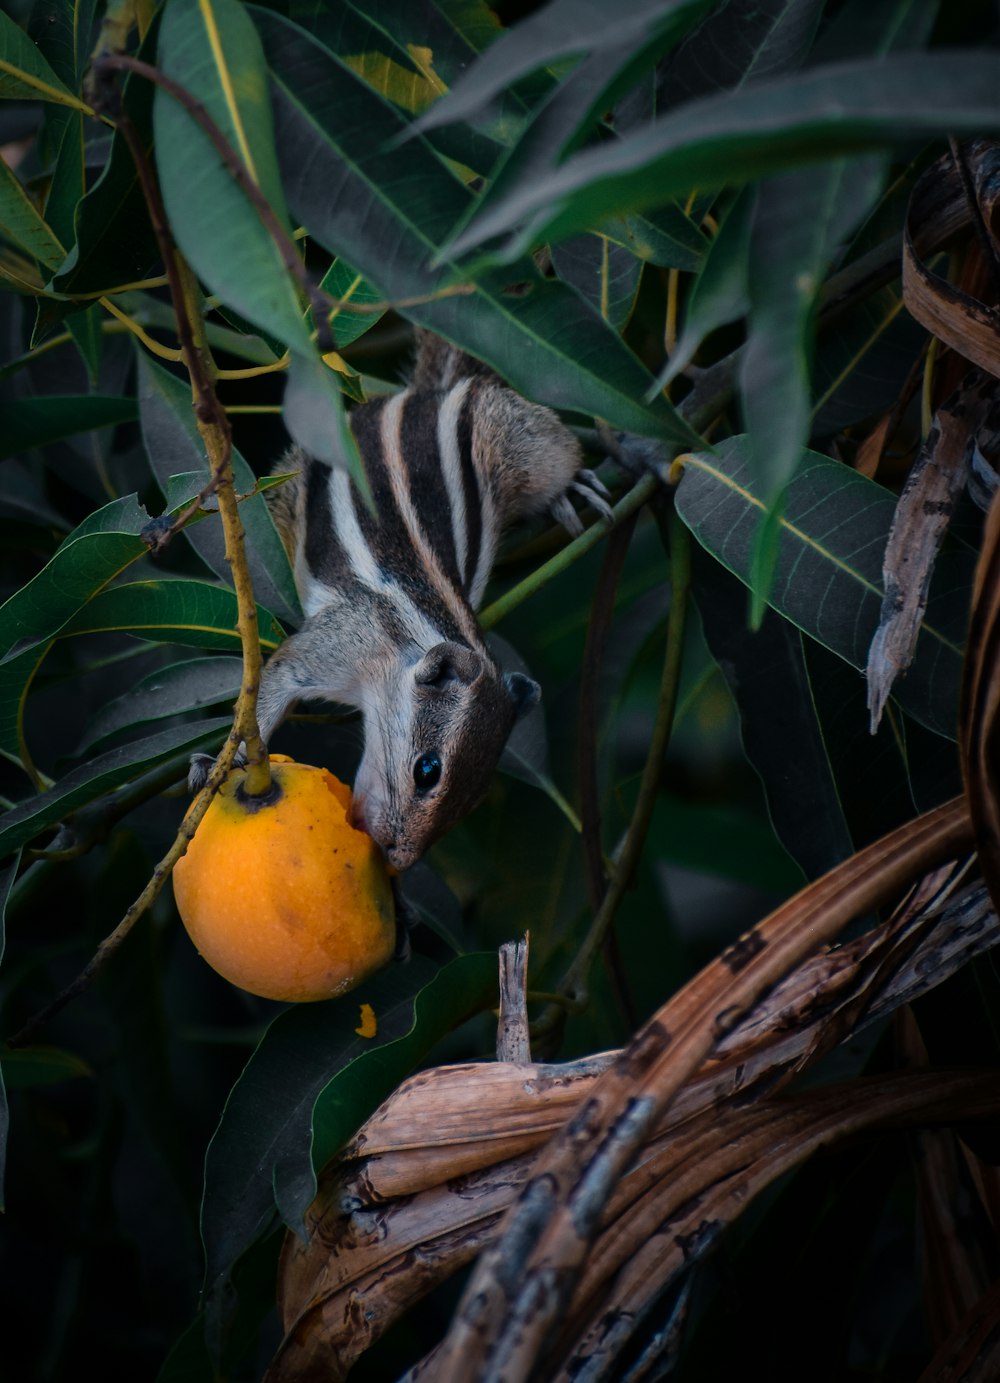 a zebra eating an orange on a tree